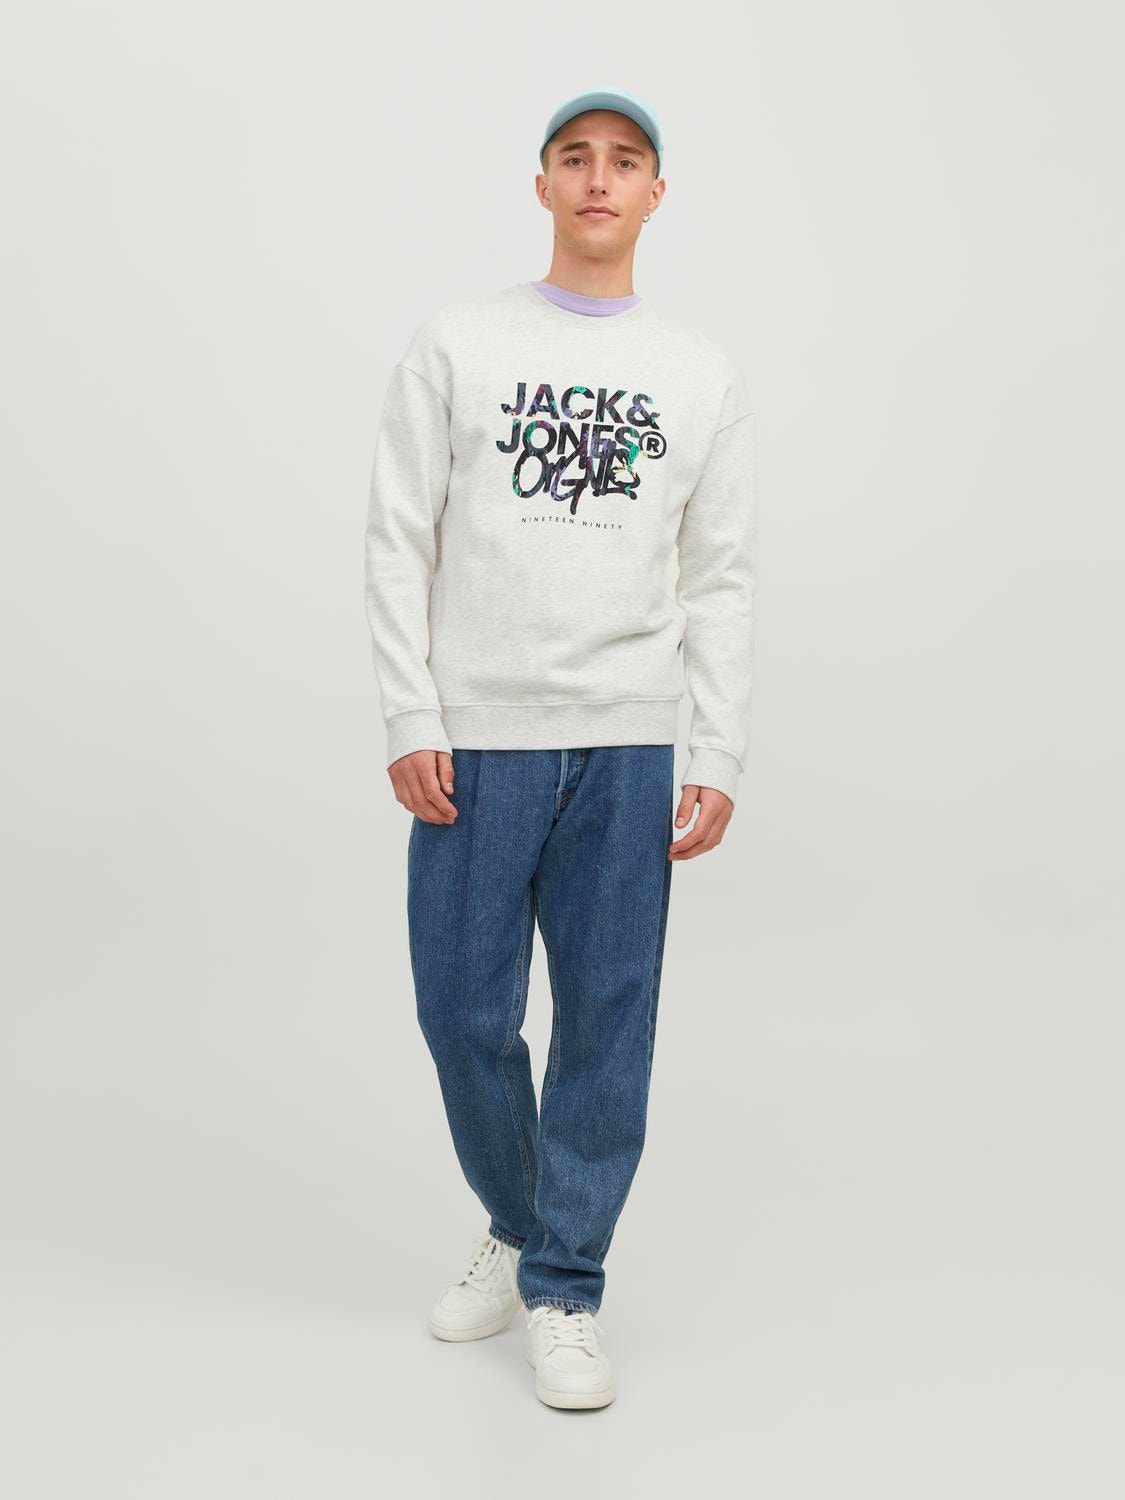 Jack & Jones Printed Crewn Neck Sweatshirt -White Melange - 12242366